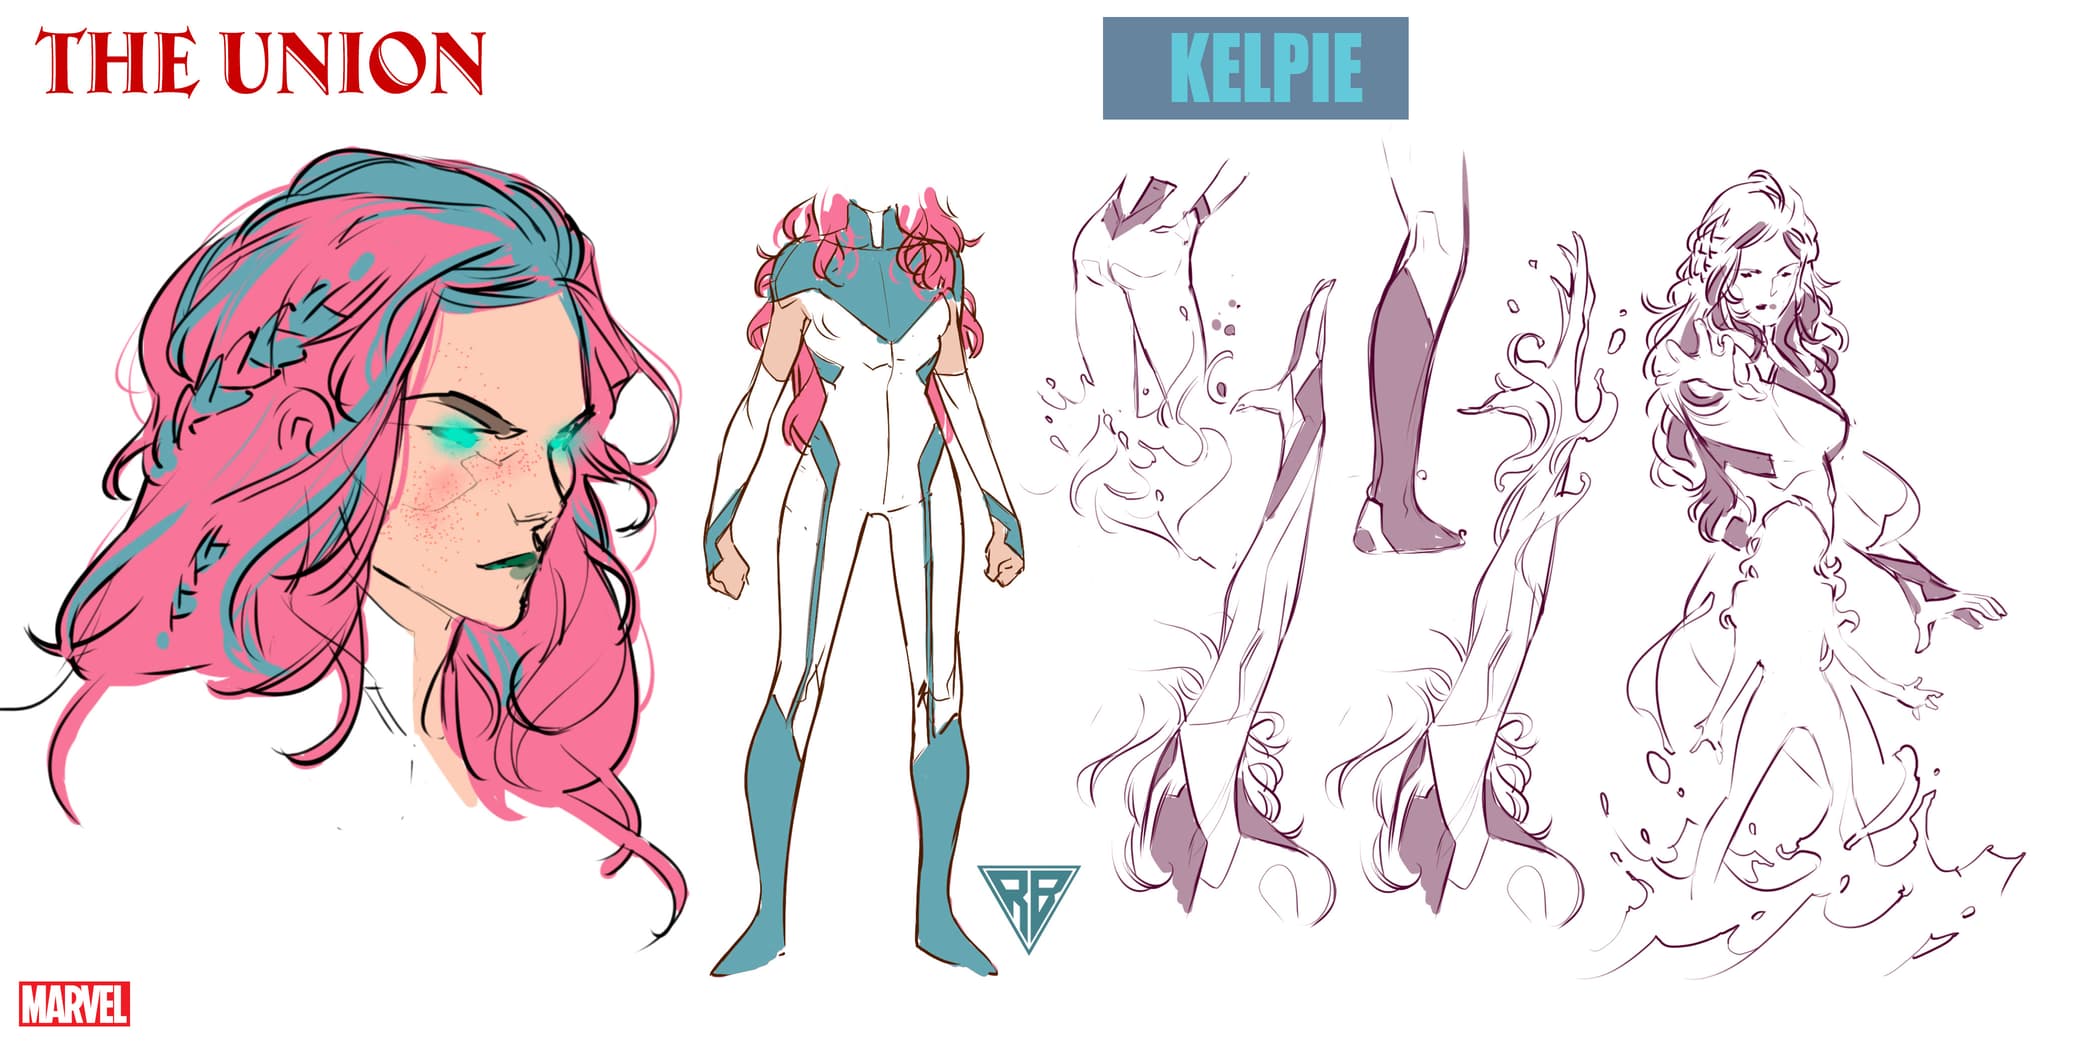 Kelpie character design by R.B. Silva